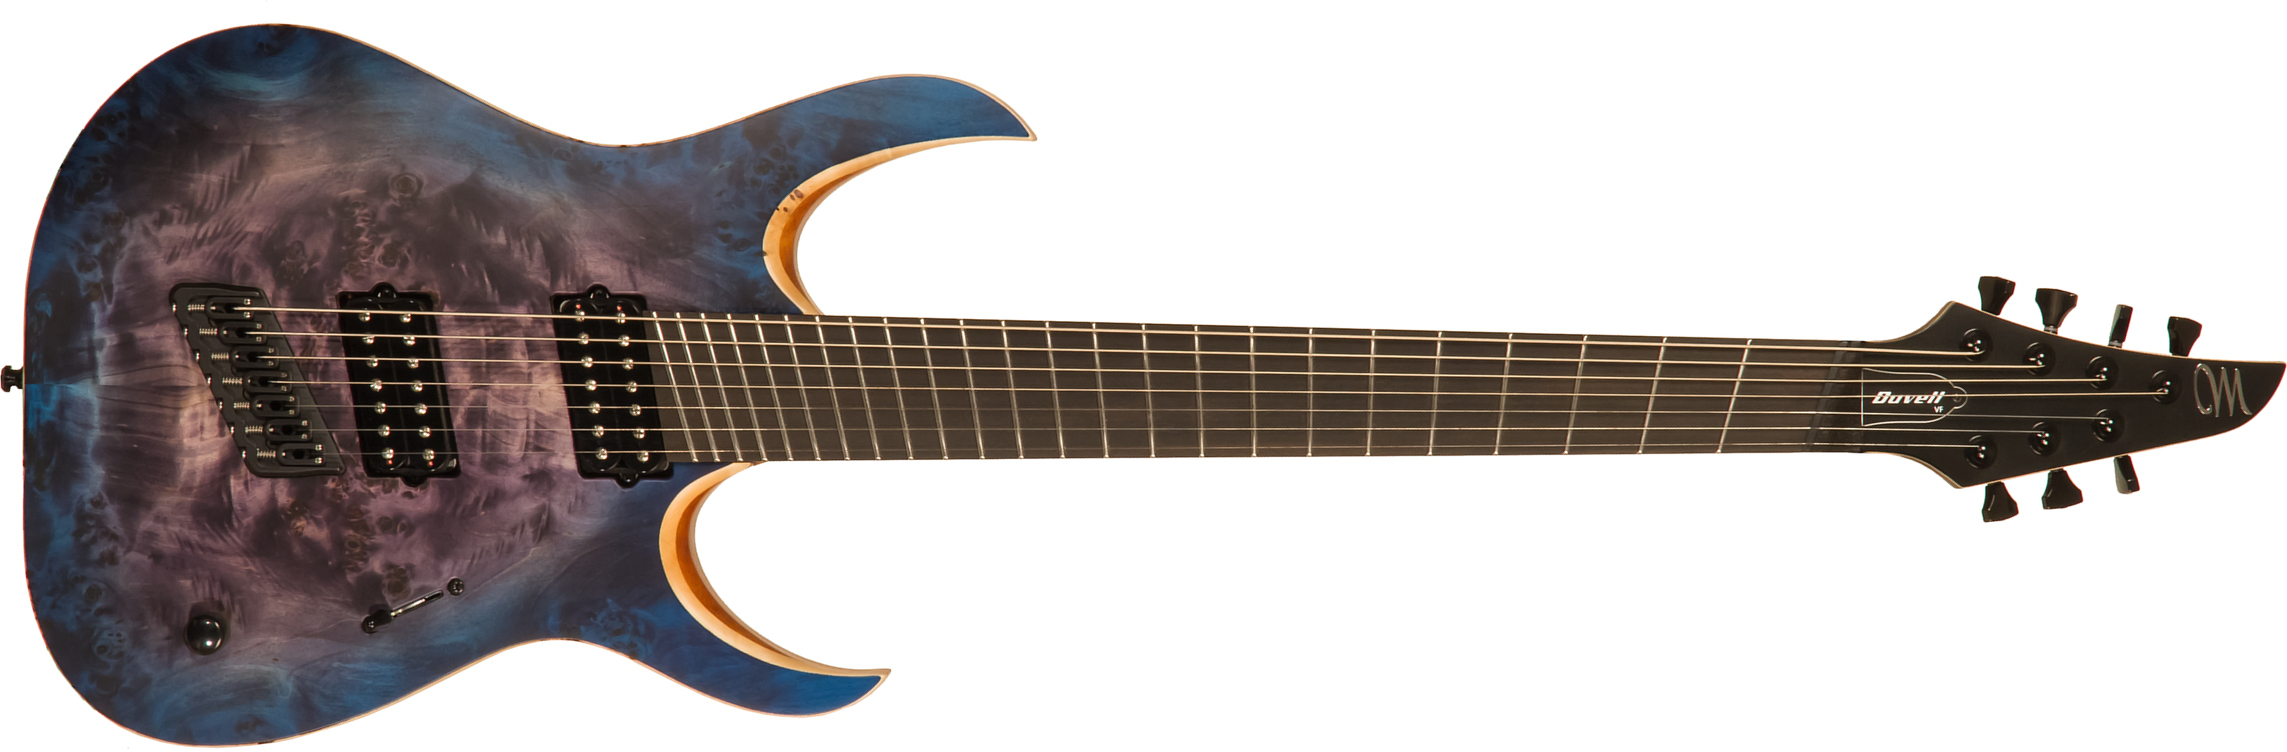 Mayones Guitars Duvell Elite V-frets 7c Hh Bare Knuckle Ht Eb - Jeans Black 3-tone Blue Burst Satin - Multi-Scale Guitar - Main picture